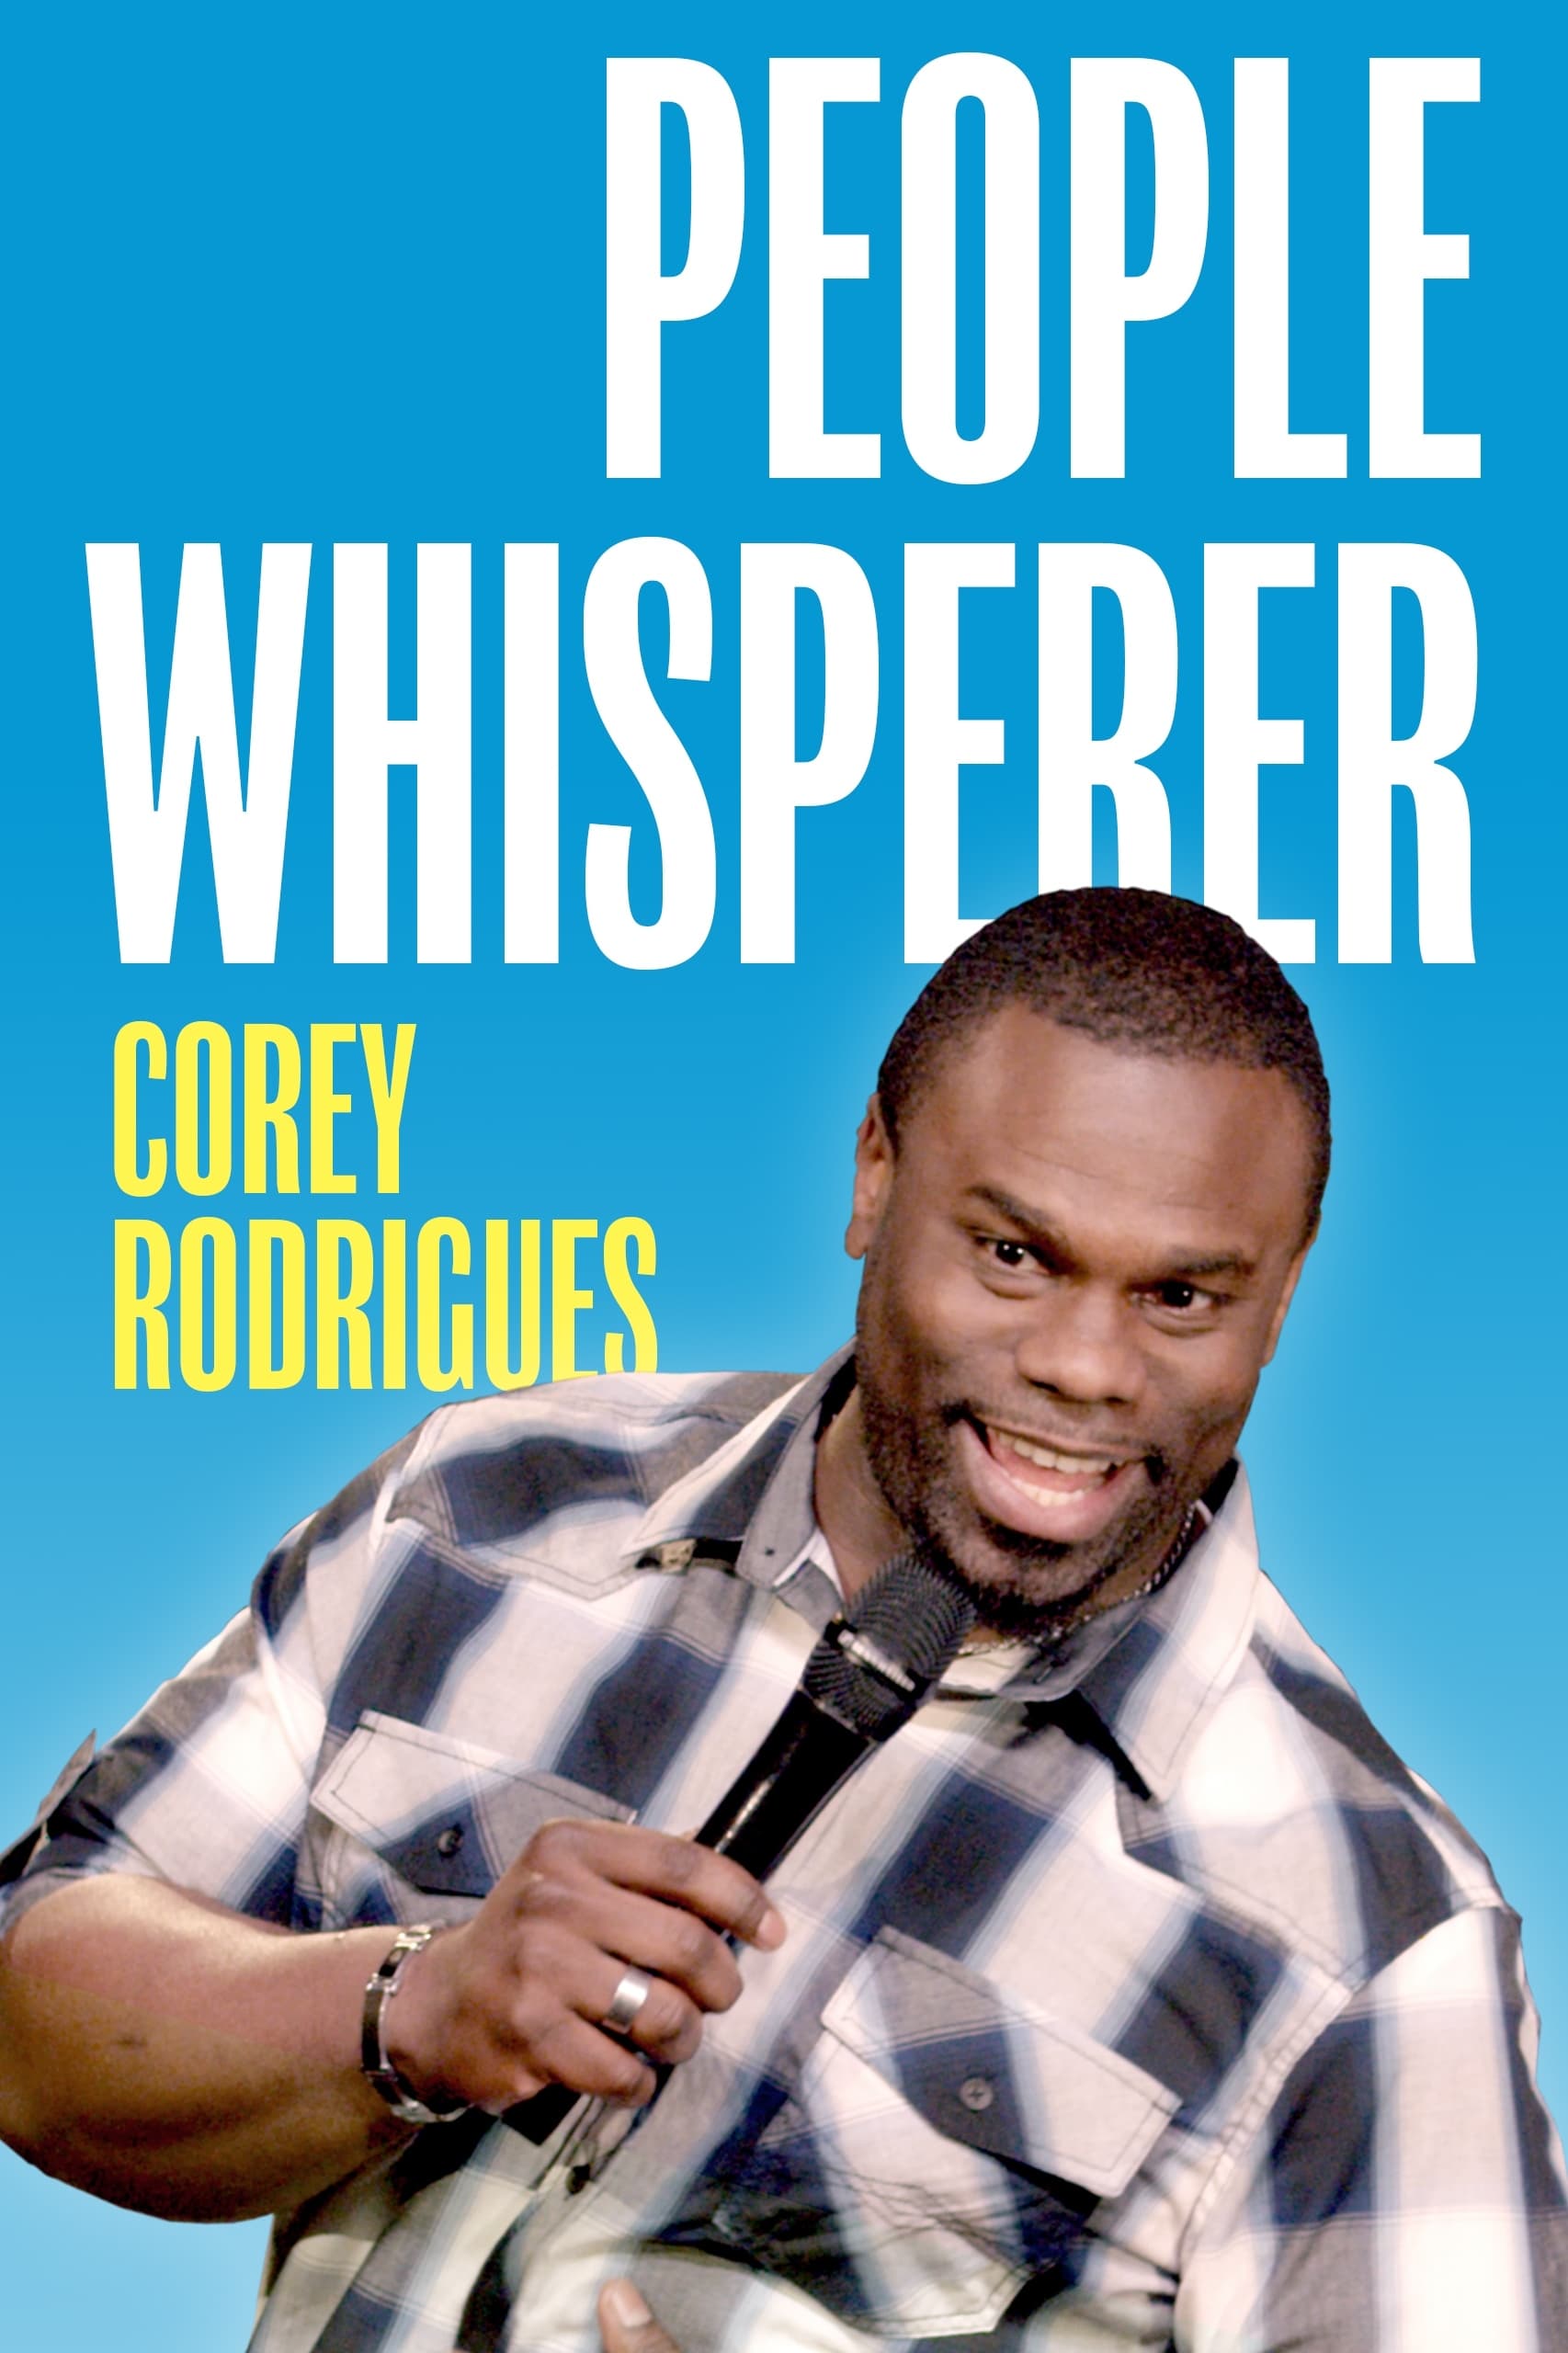 Corey Rodrigues: People Whisperer